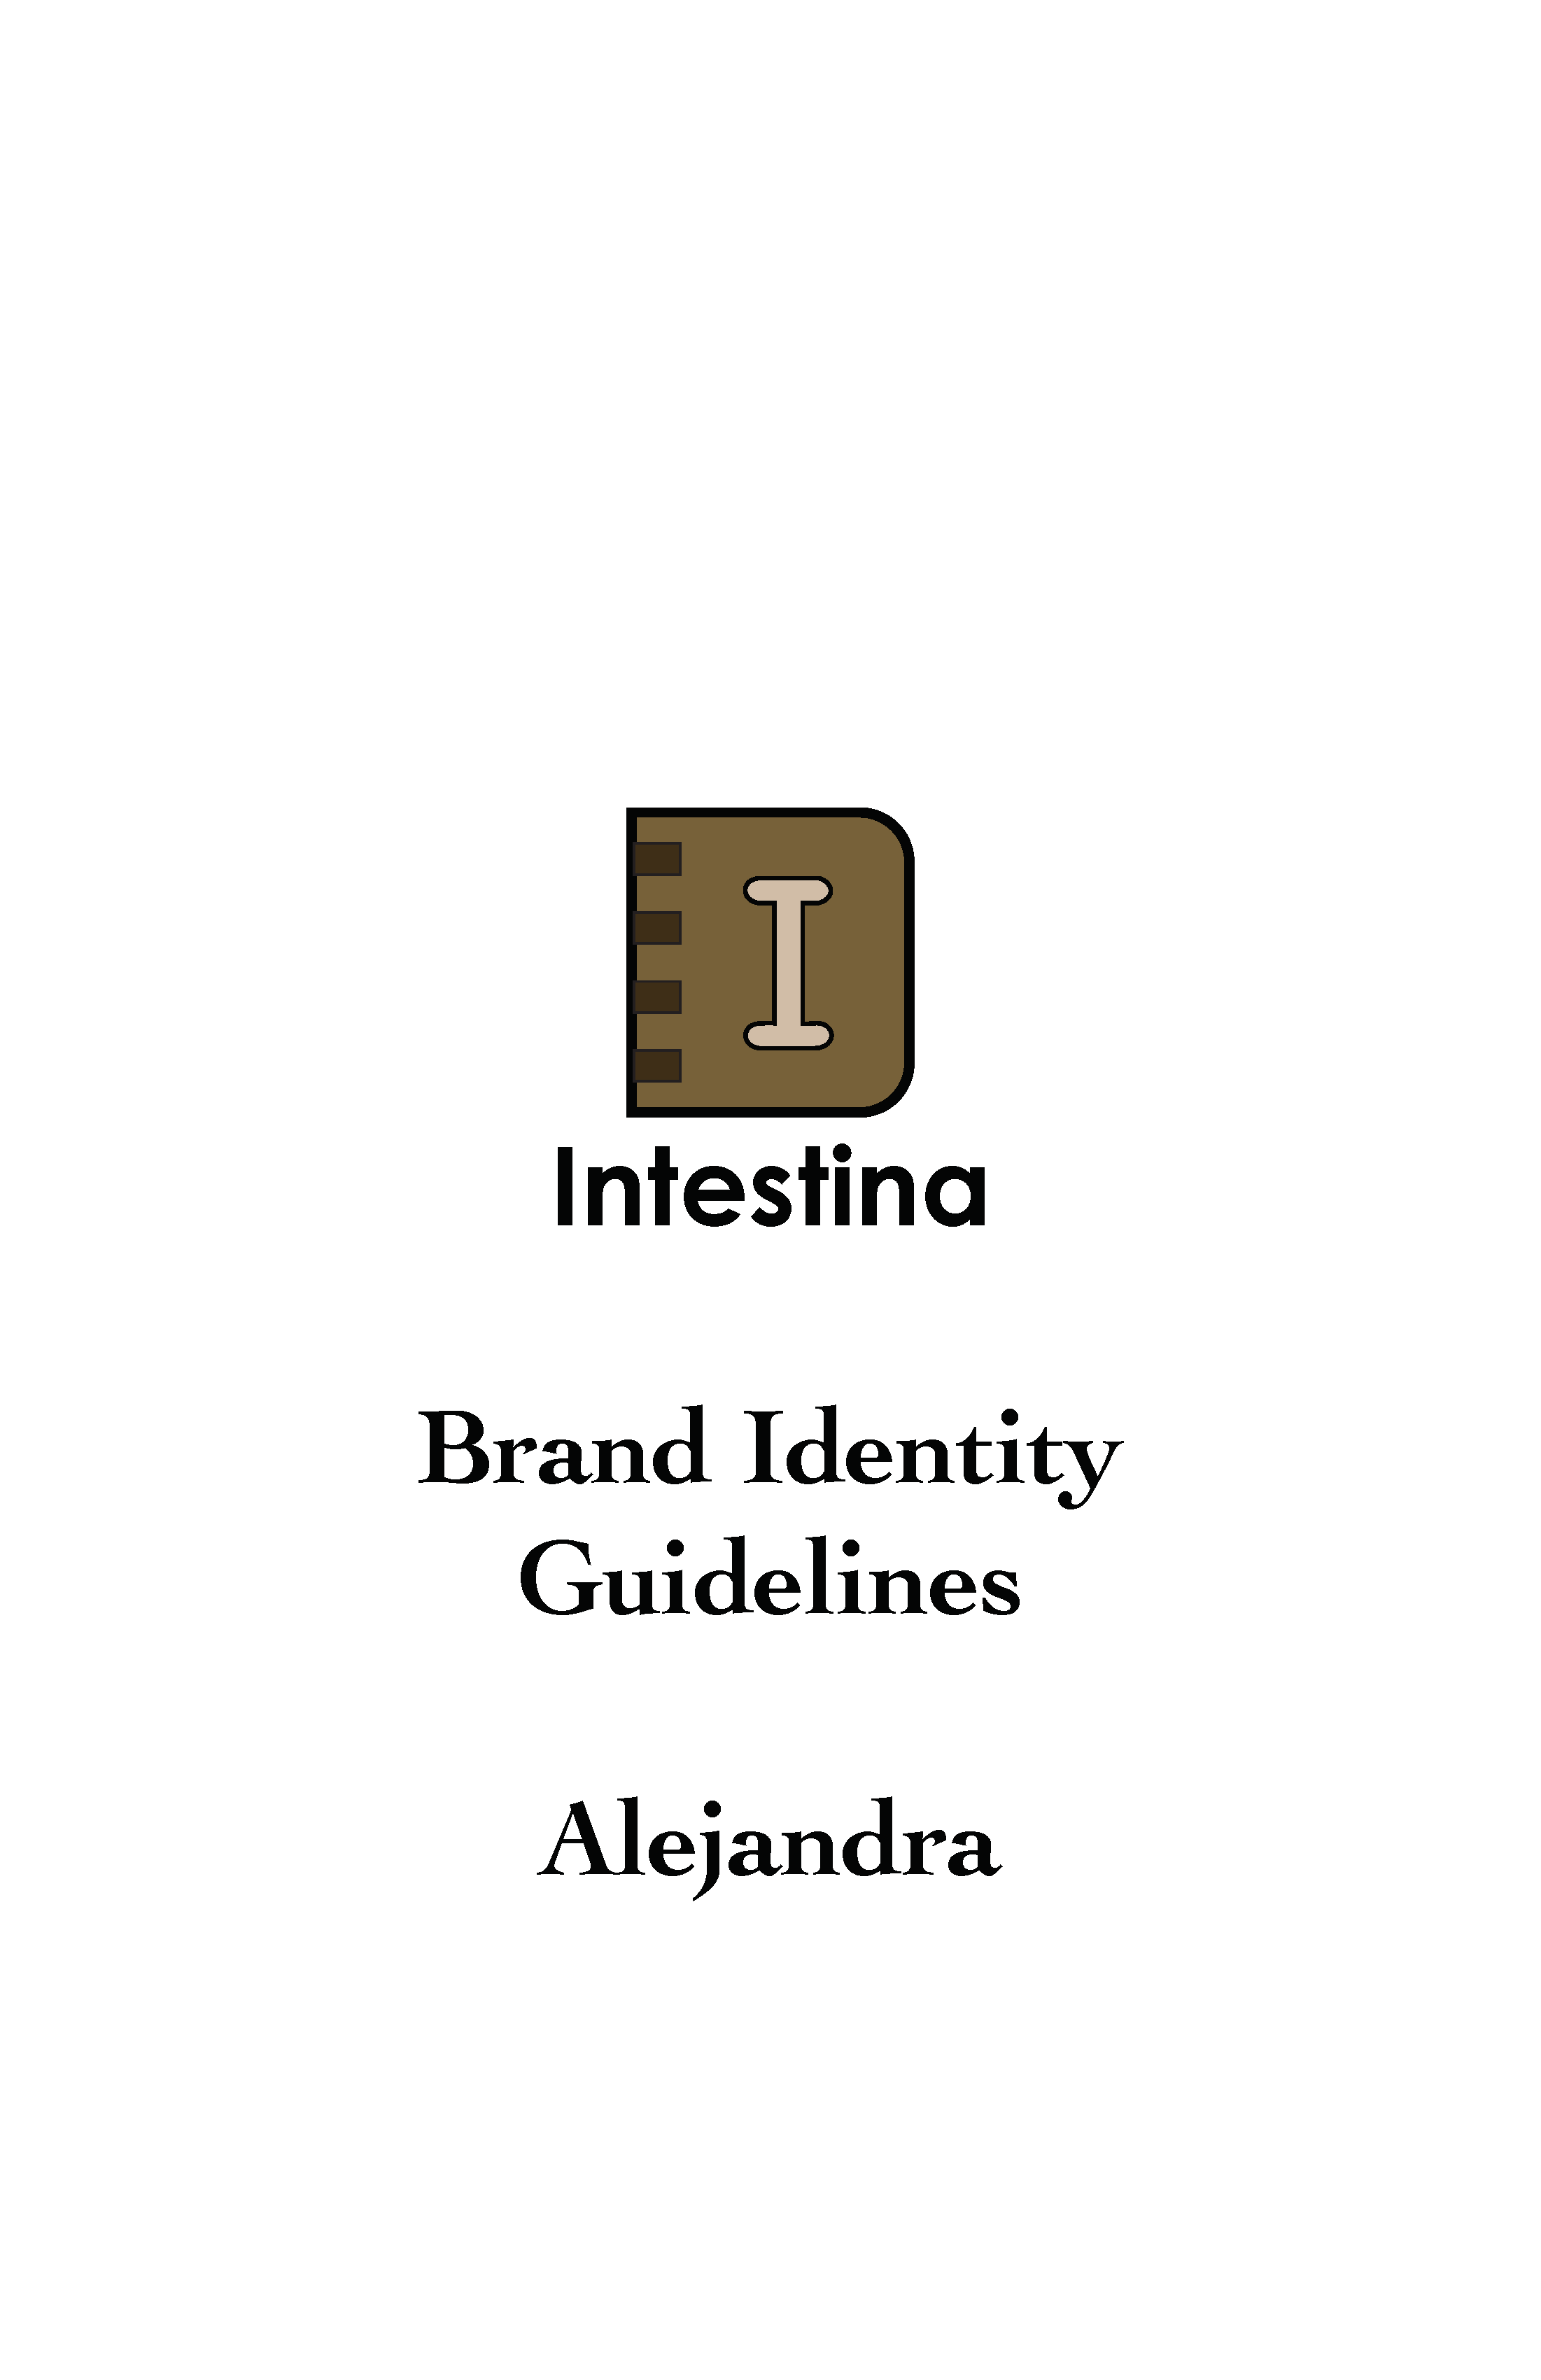 Intestina brand guidelines